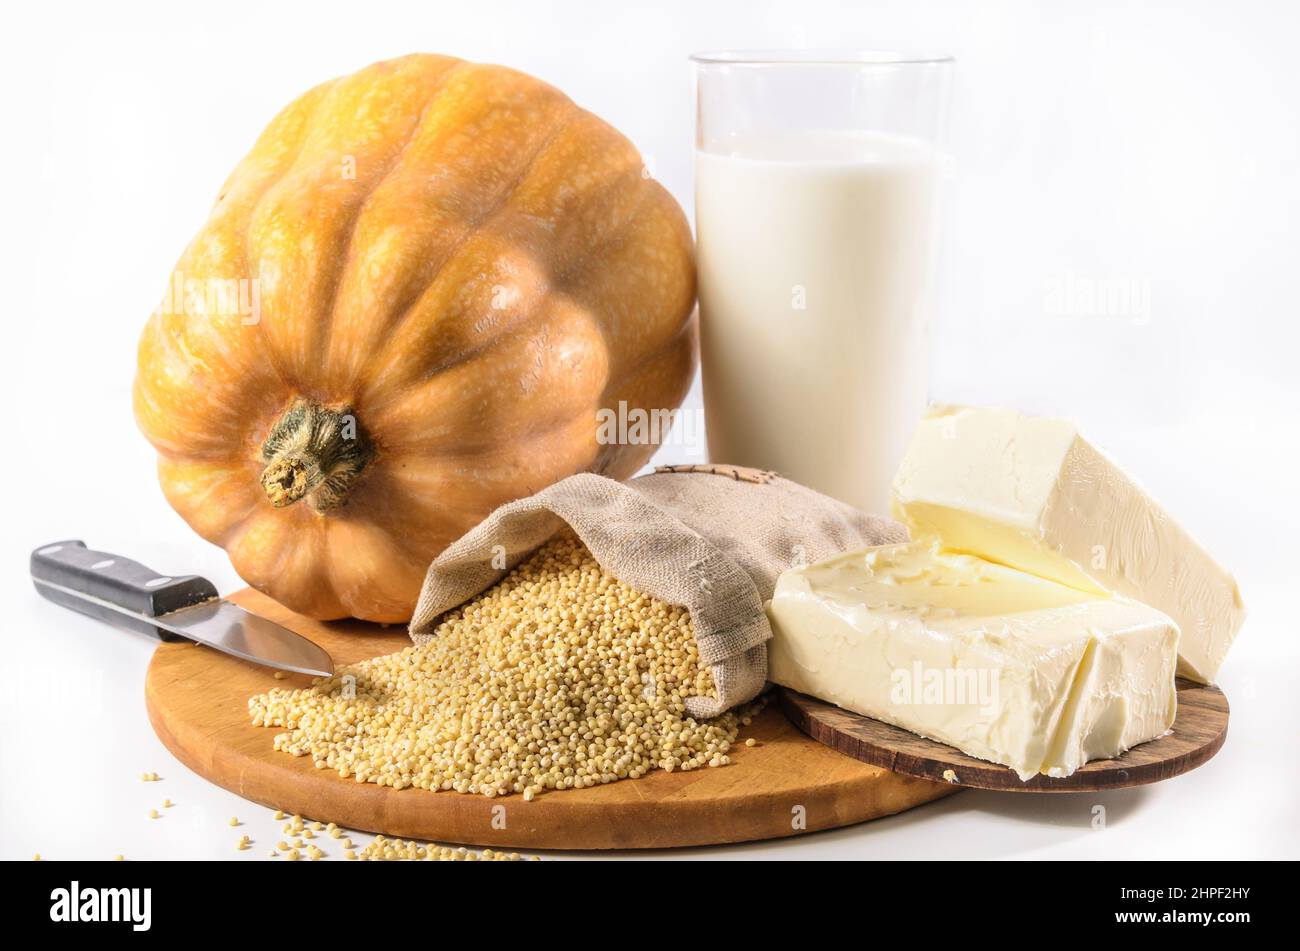 pumpkin, millet and other ingredients for pumpkin porridge on a light background Stock Photo